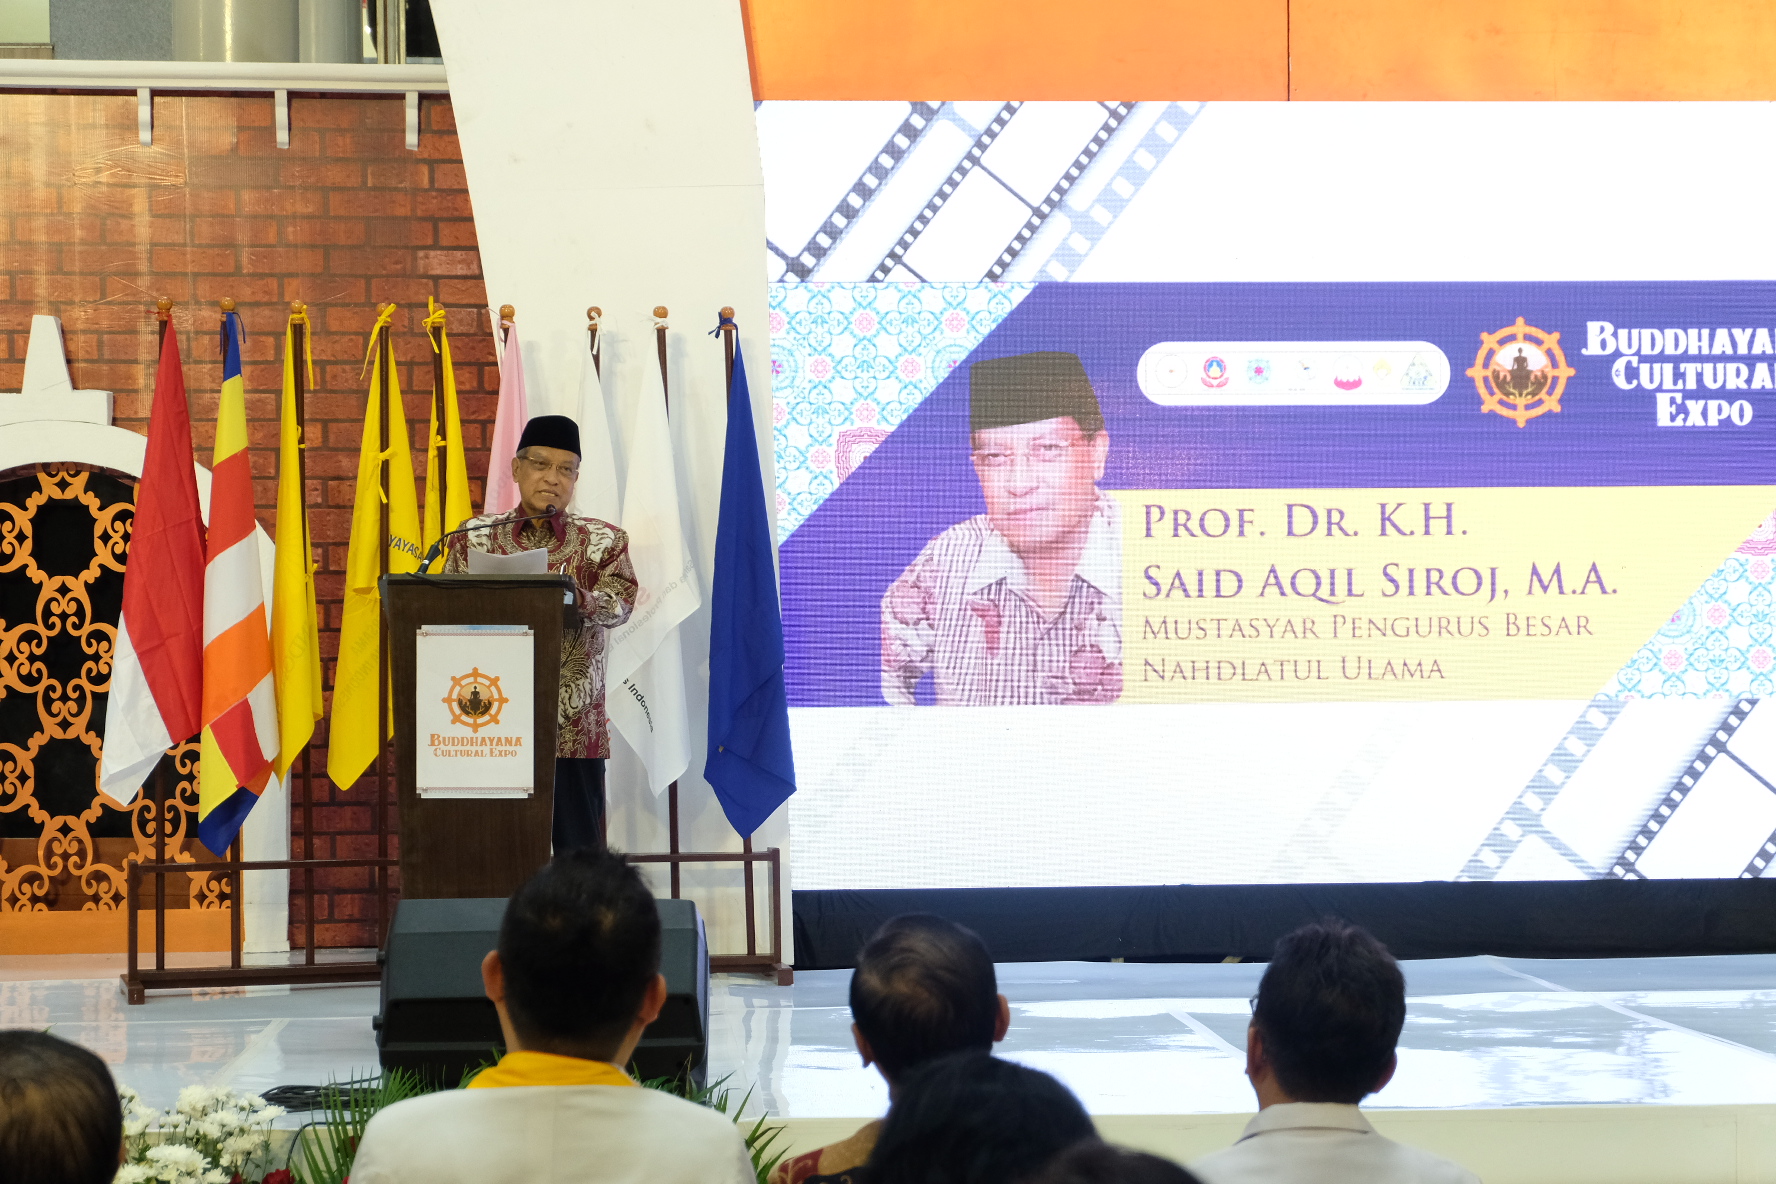 Prof. Dr. Kh. Said Aqil Siroj, M.A. Hadiri Pembukaan Buddhayana Culture Expo 2023 yang Majelis Buddhayana Indonesia (MBI) Cabang Surabaya